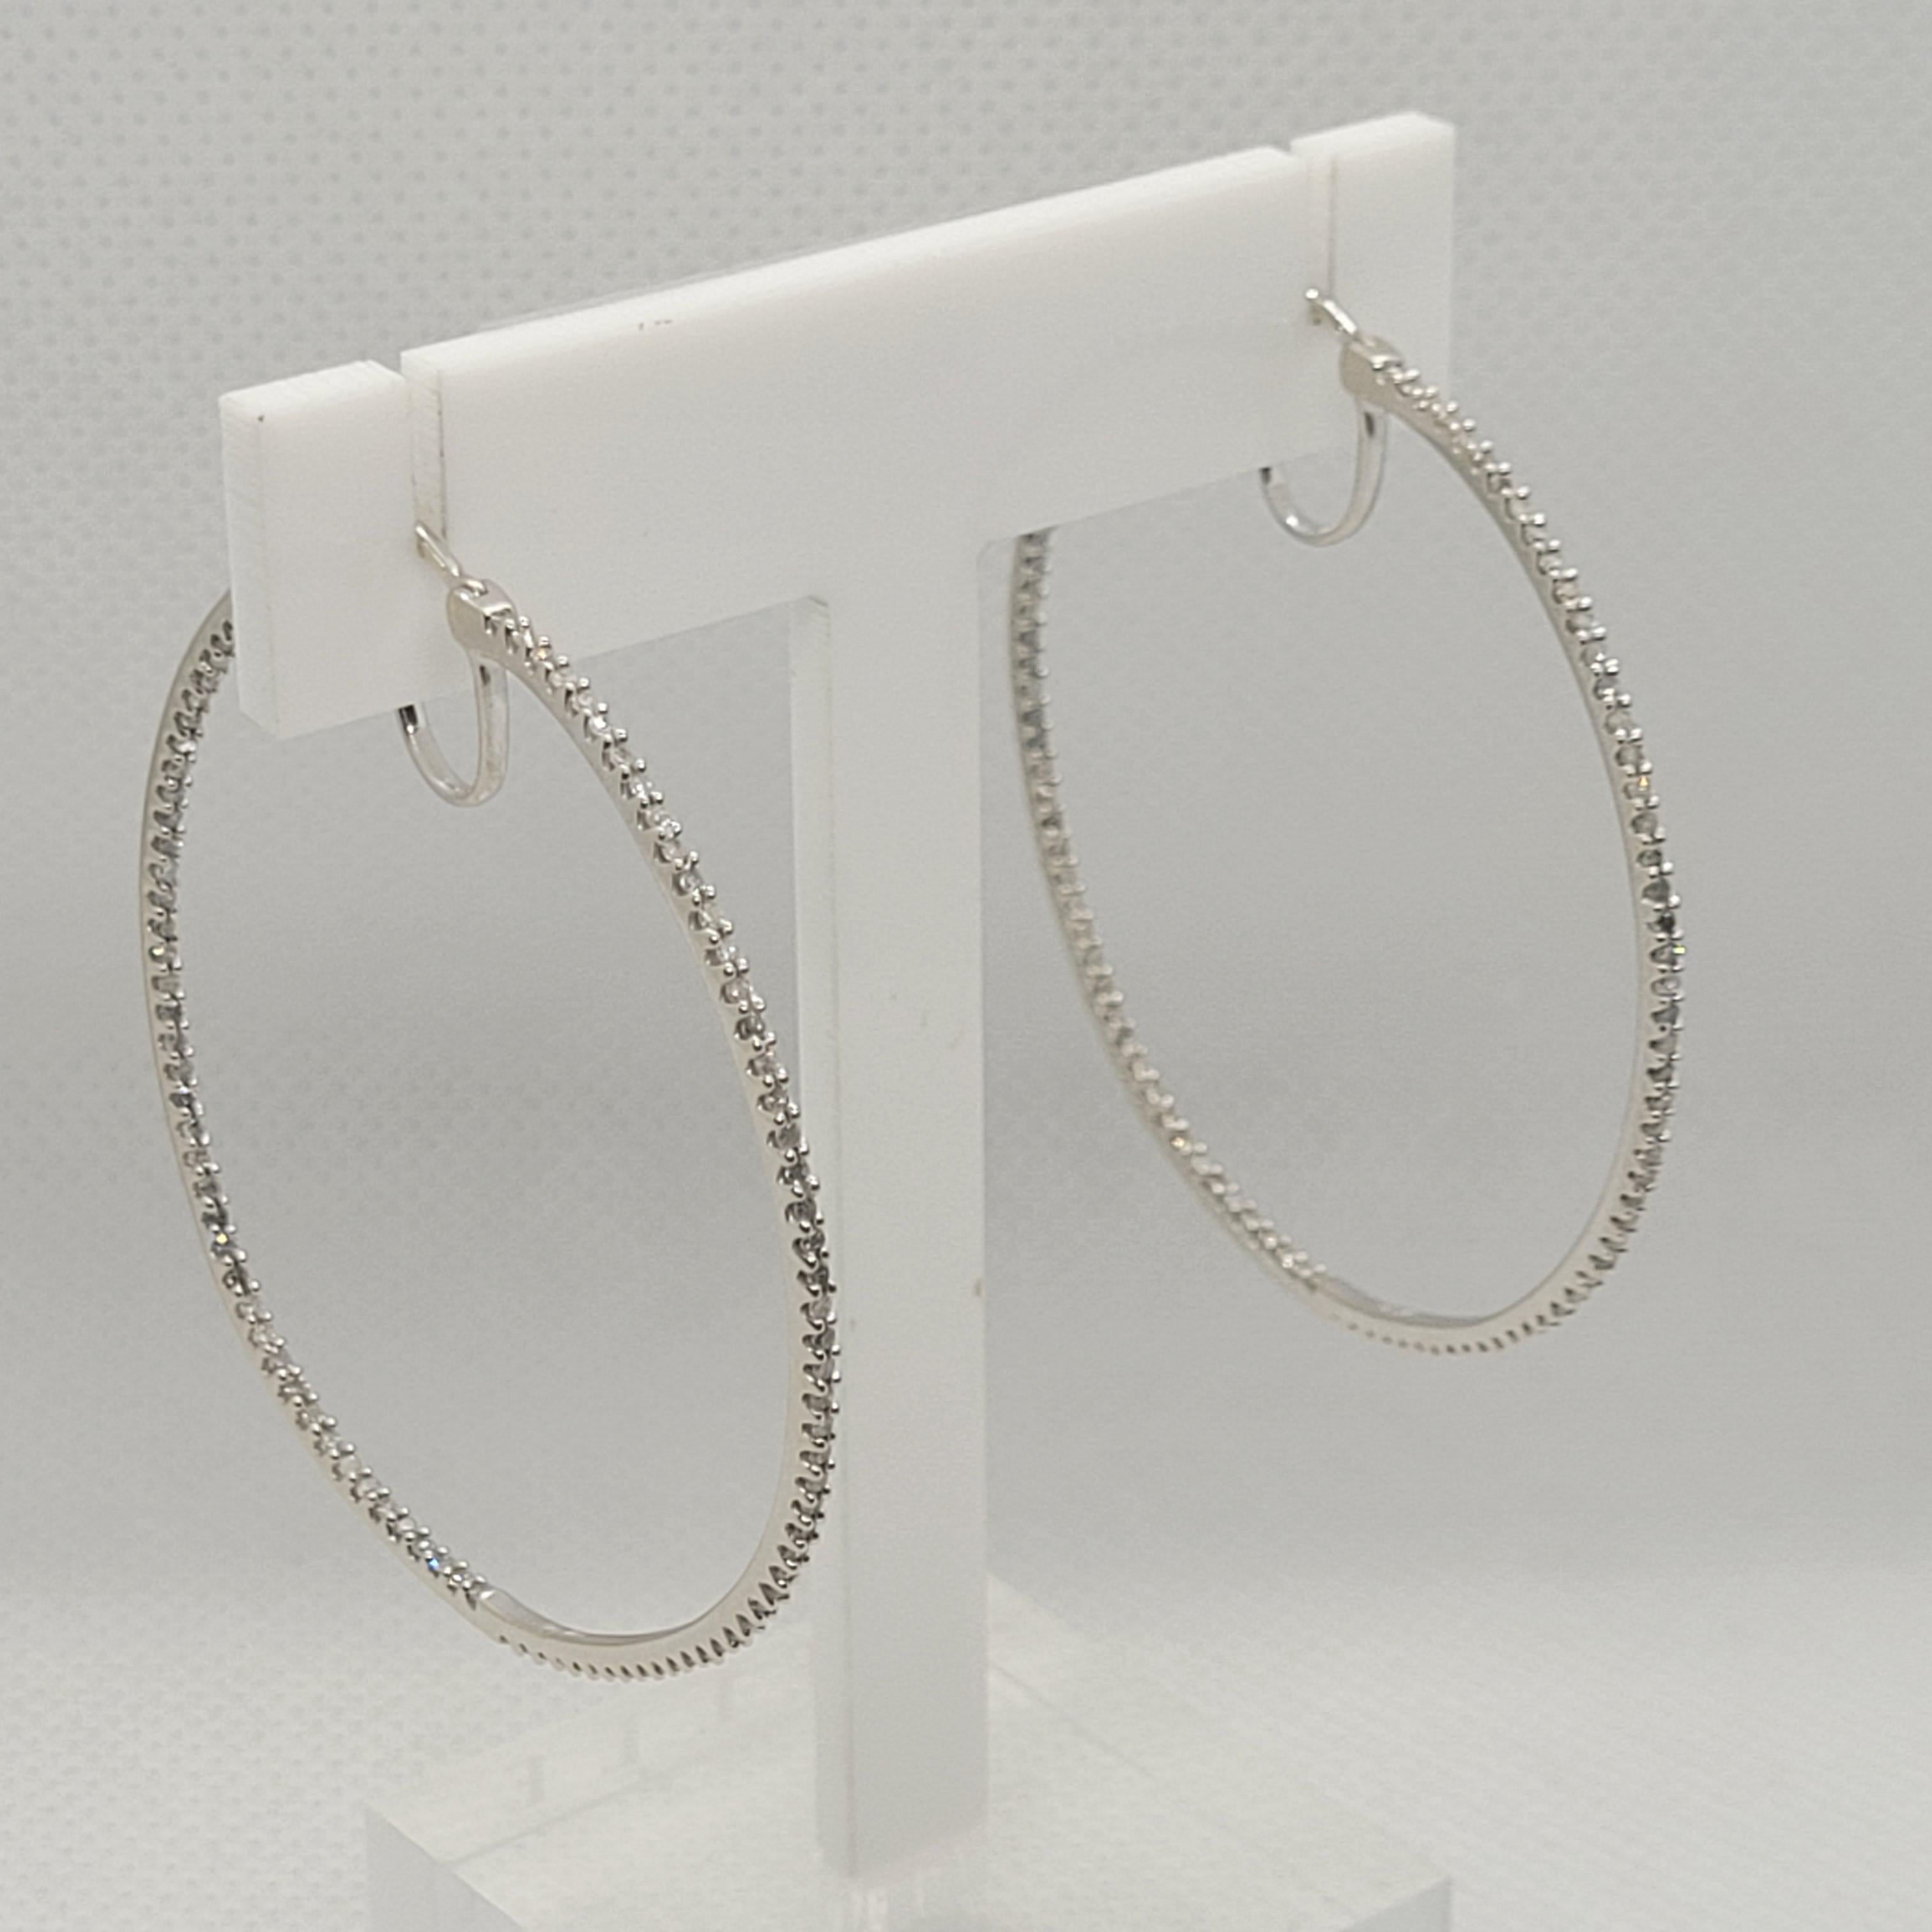 10kt White Gold Large 2.00cttw Diamond Hoop Earrings, Inside Out Design, 48mm For Sale 3